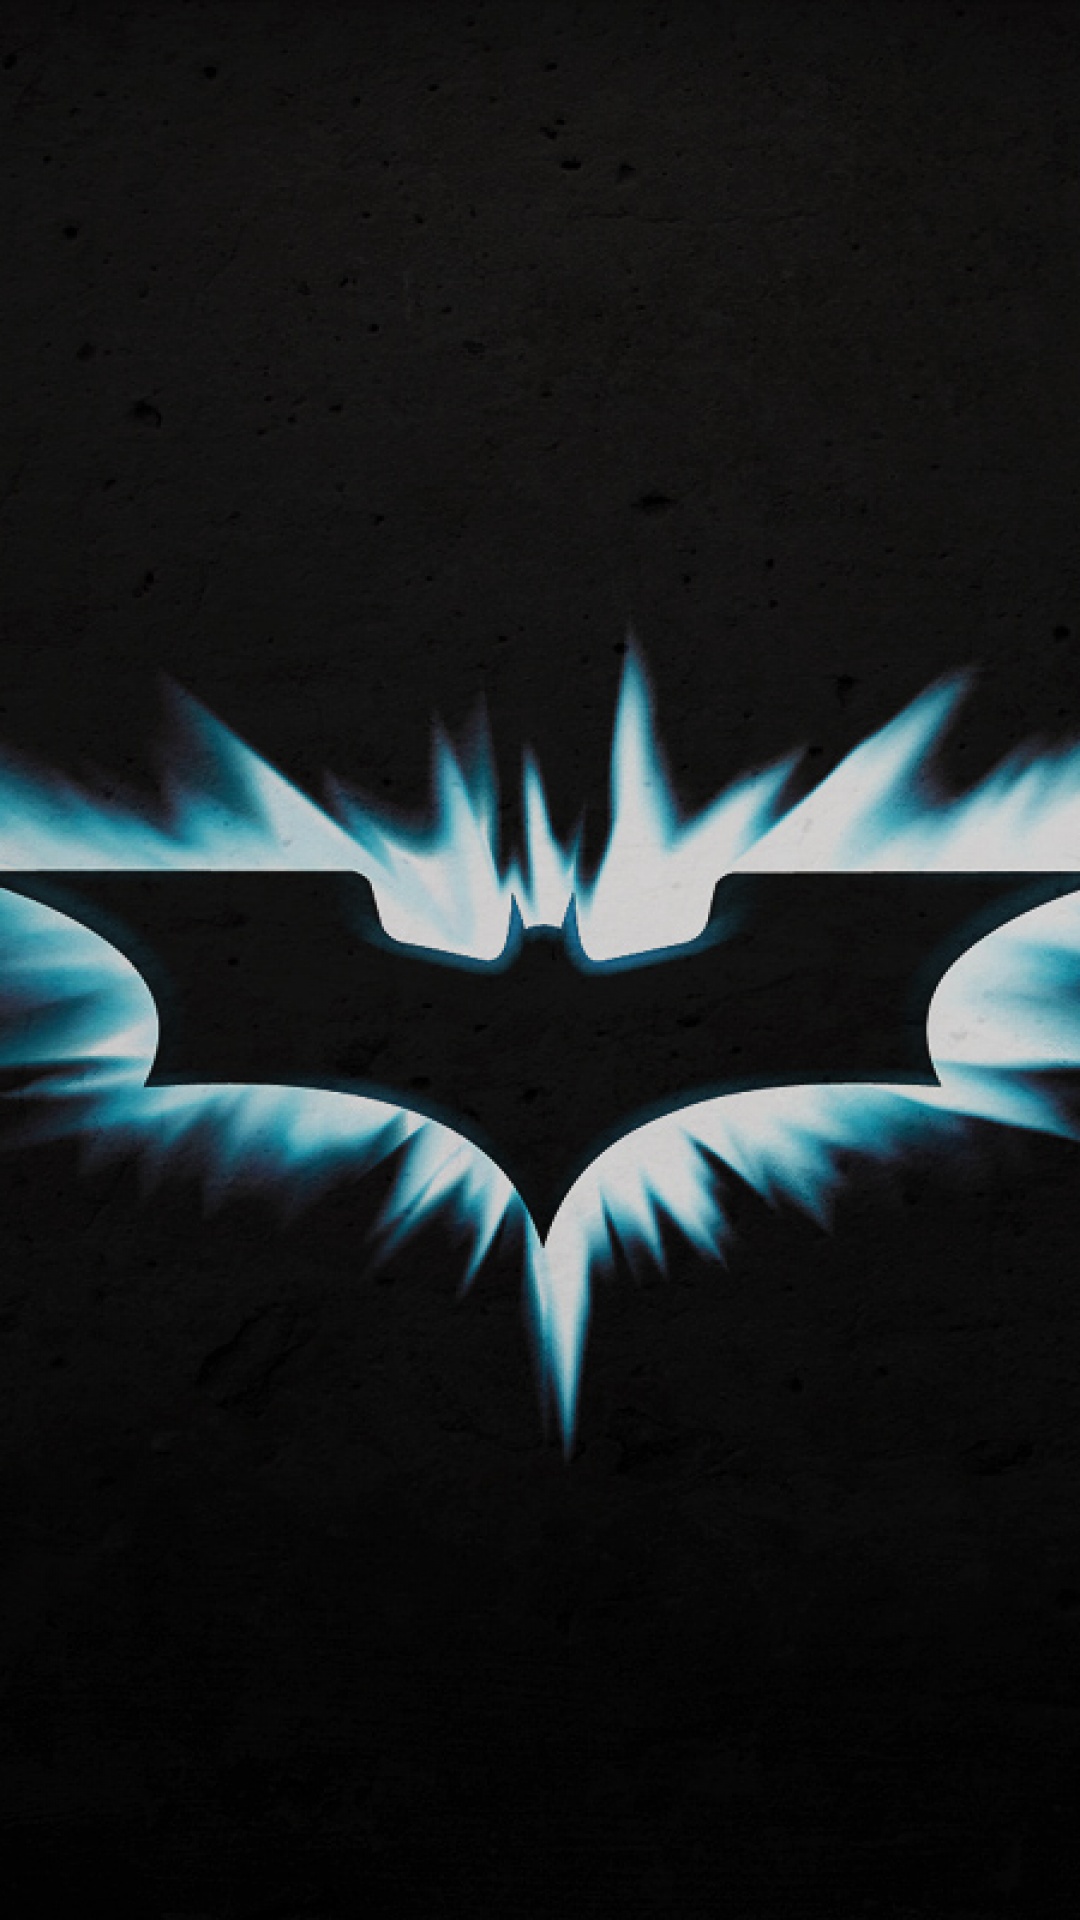 Green Batman Symbol iPhone Wallpaper 4K Image  Download 